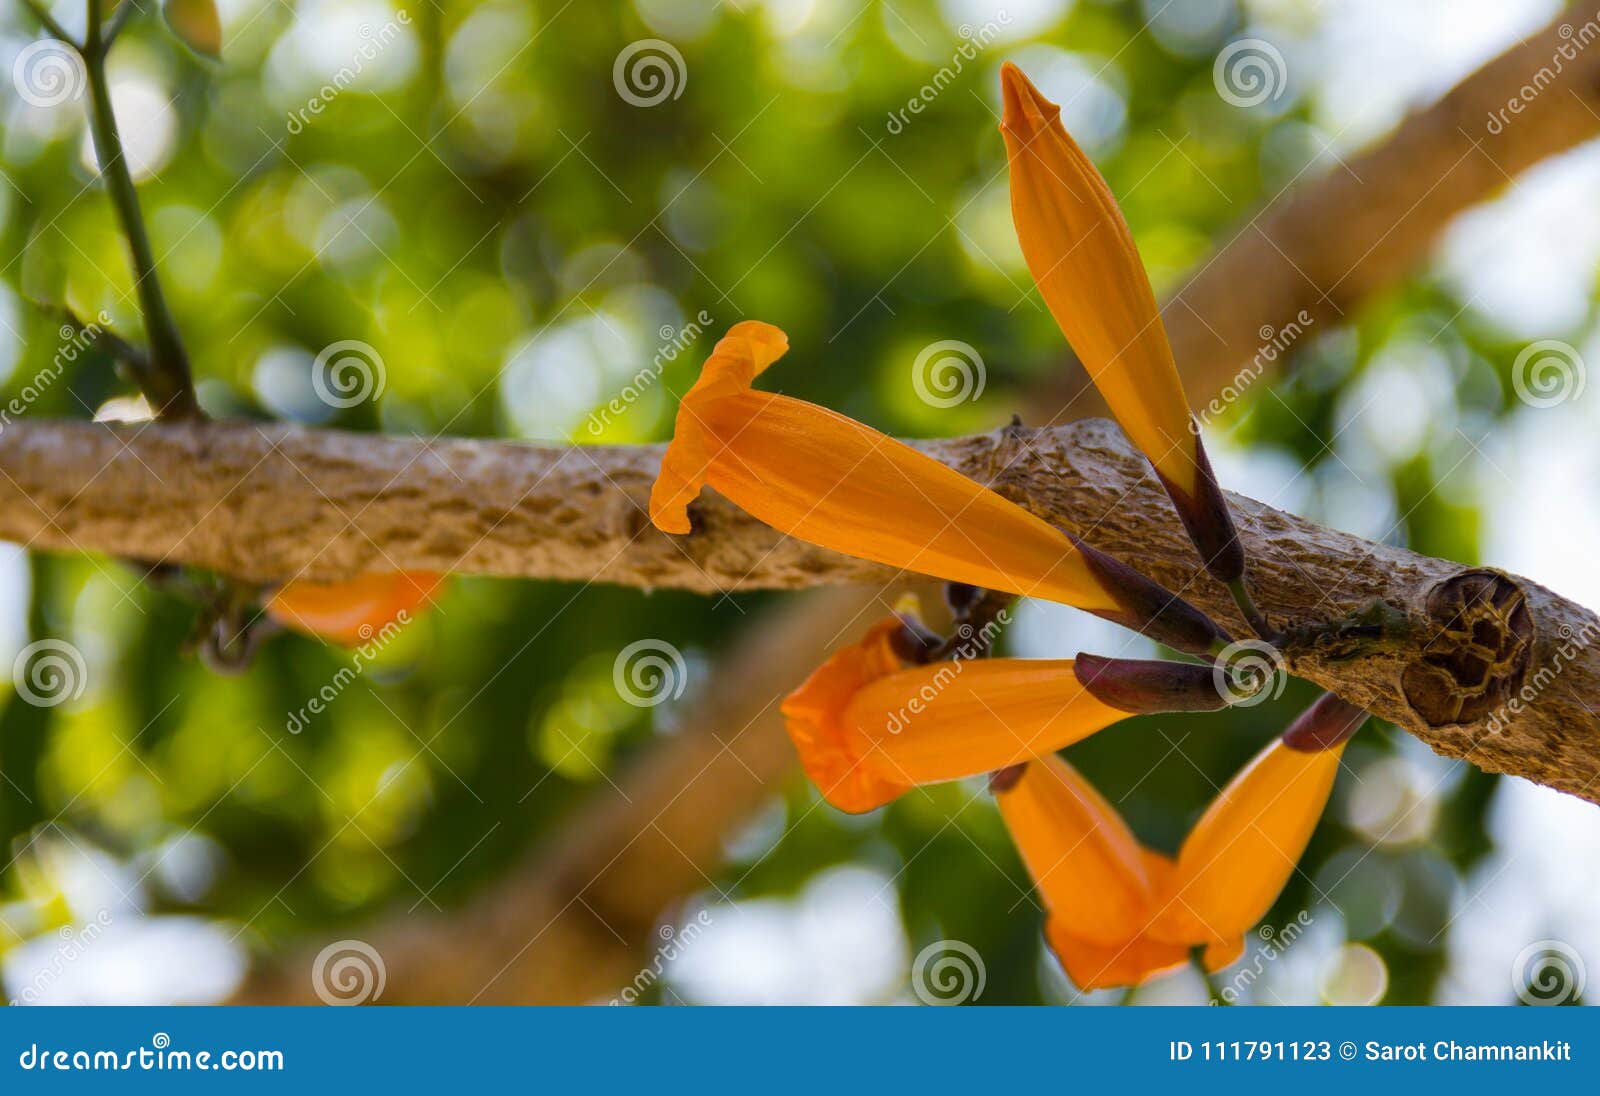 tree jasmine scientific name: radermachera. ignea